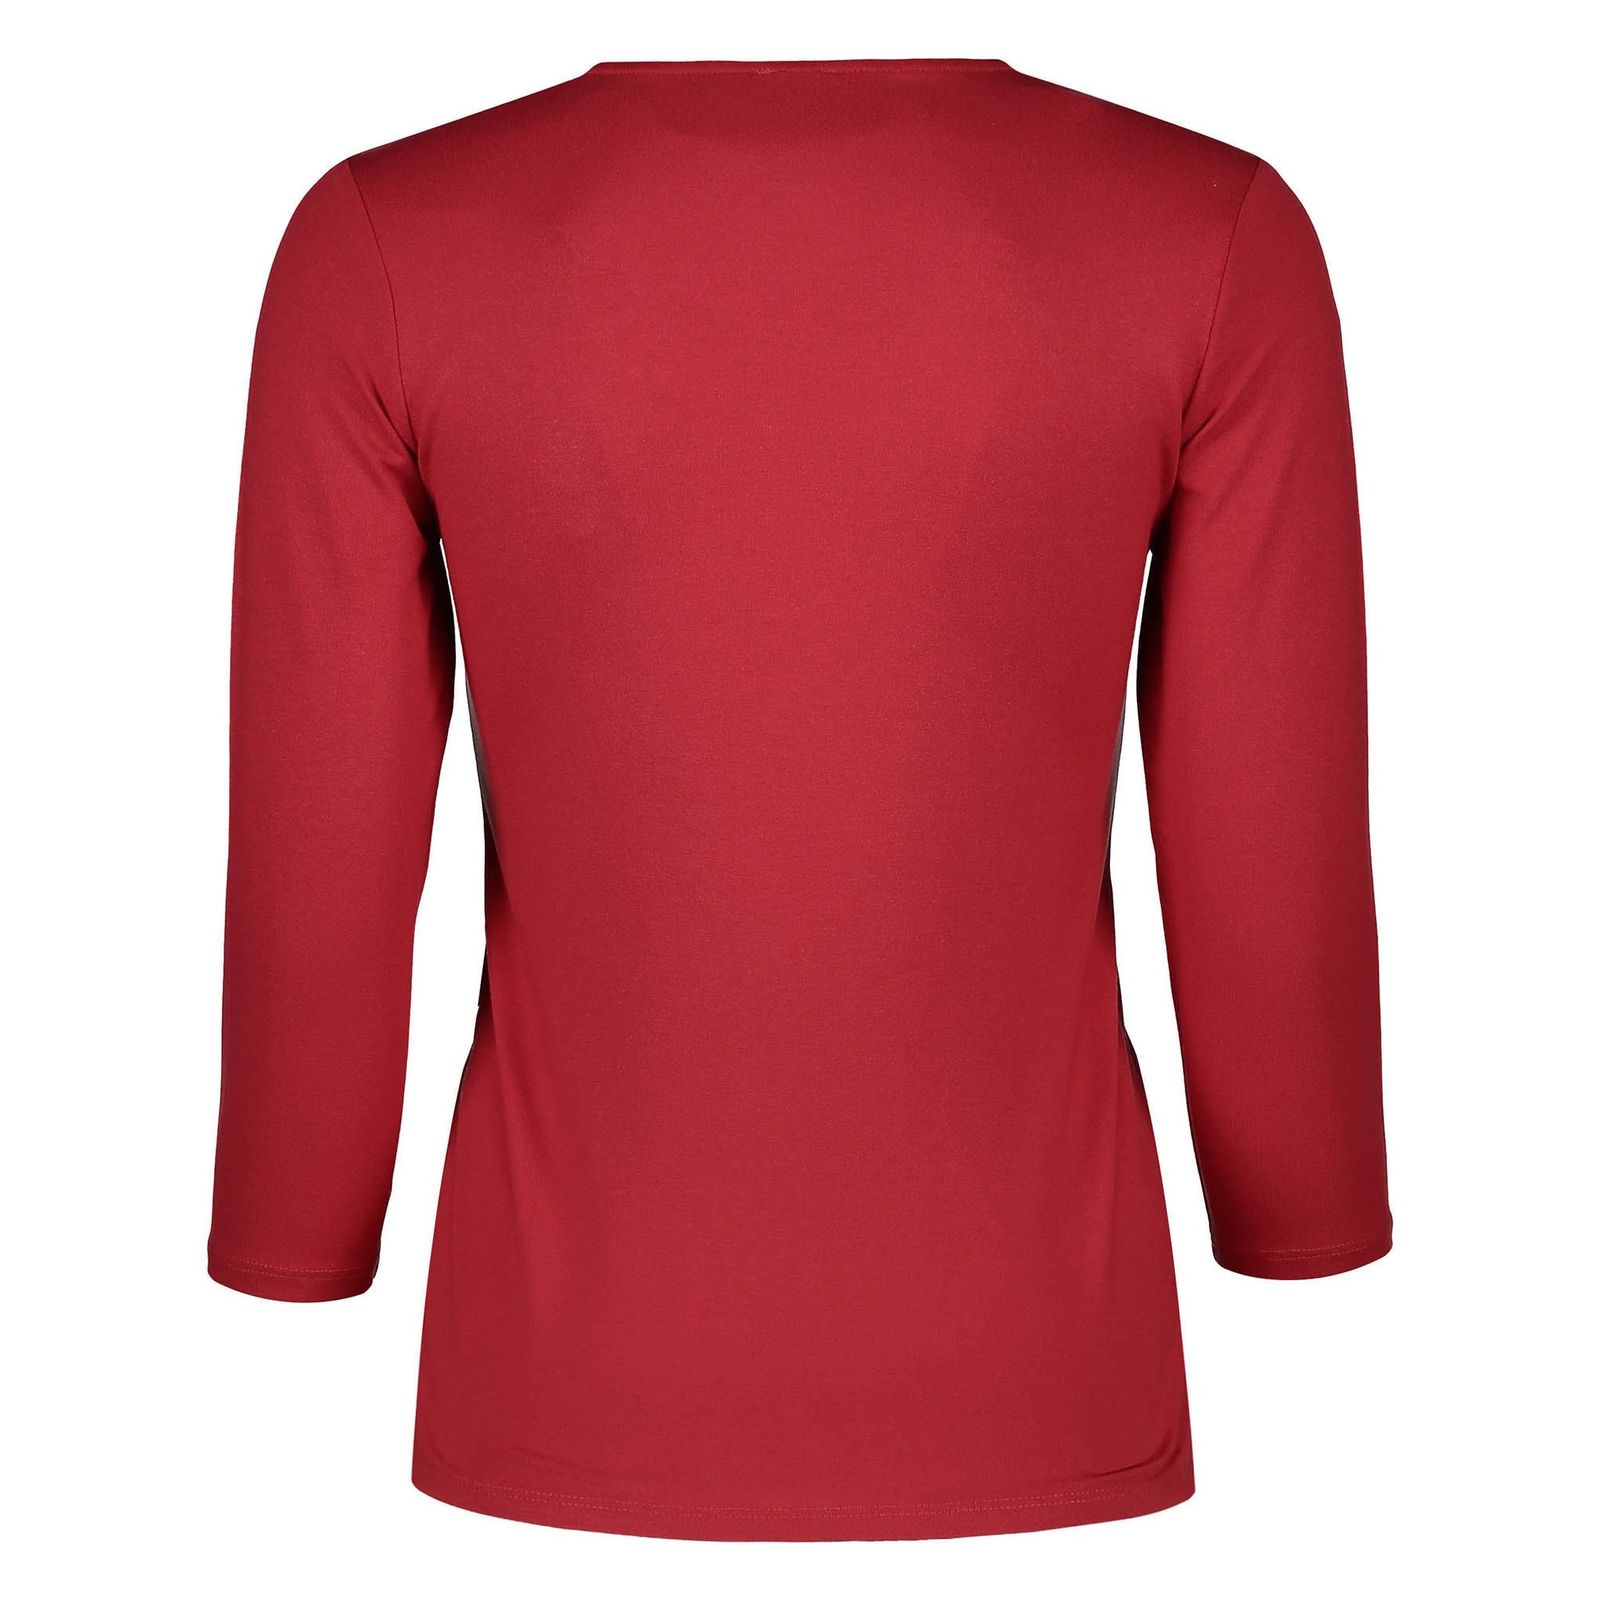 تی شرت ویسکوز یقه هفت زنانه - اس.اولیور - قرمز - 3